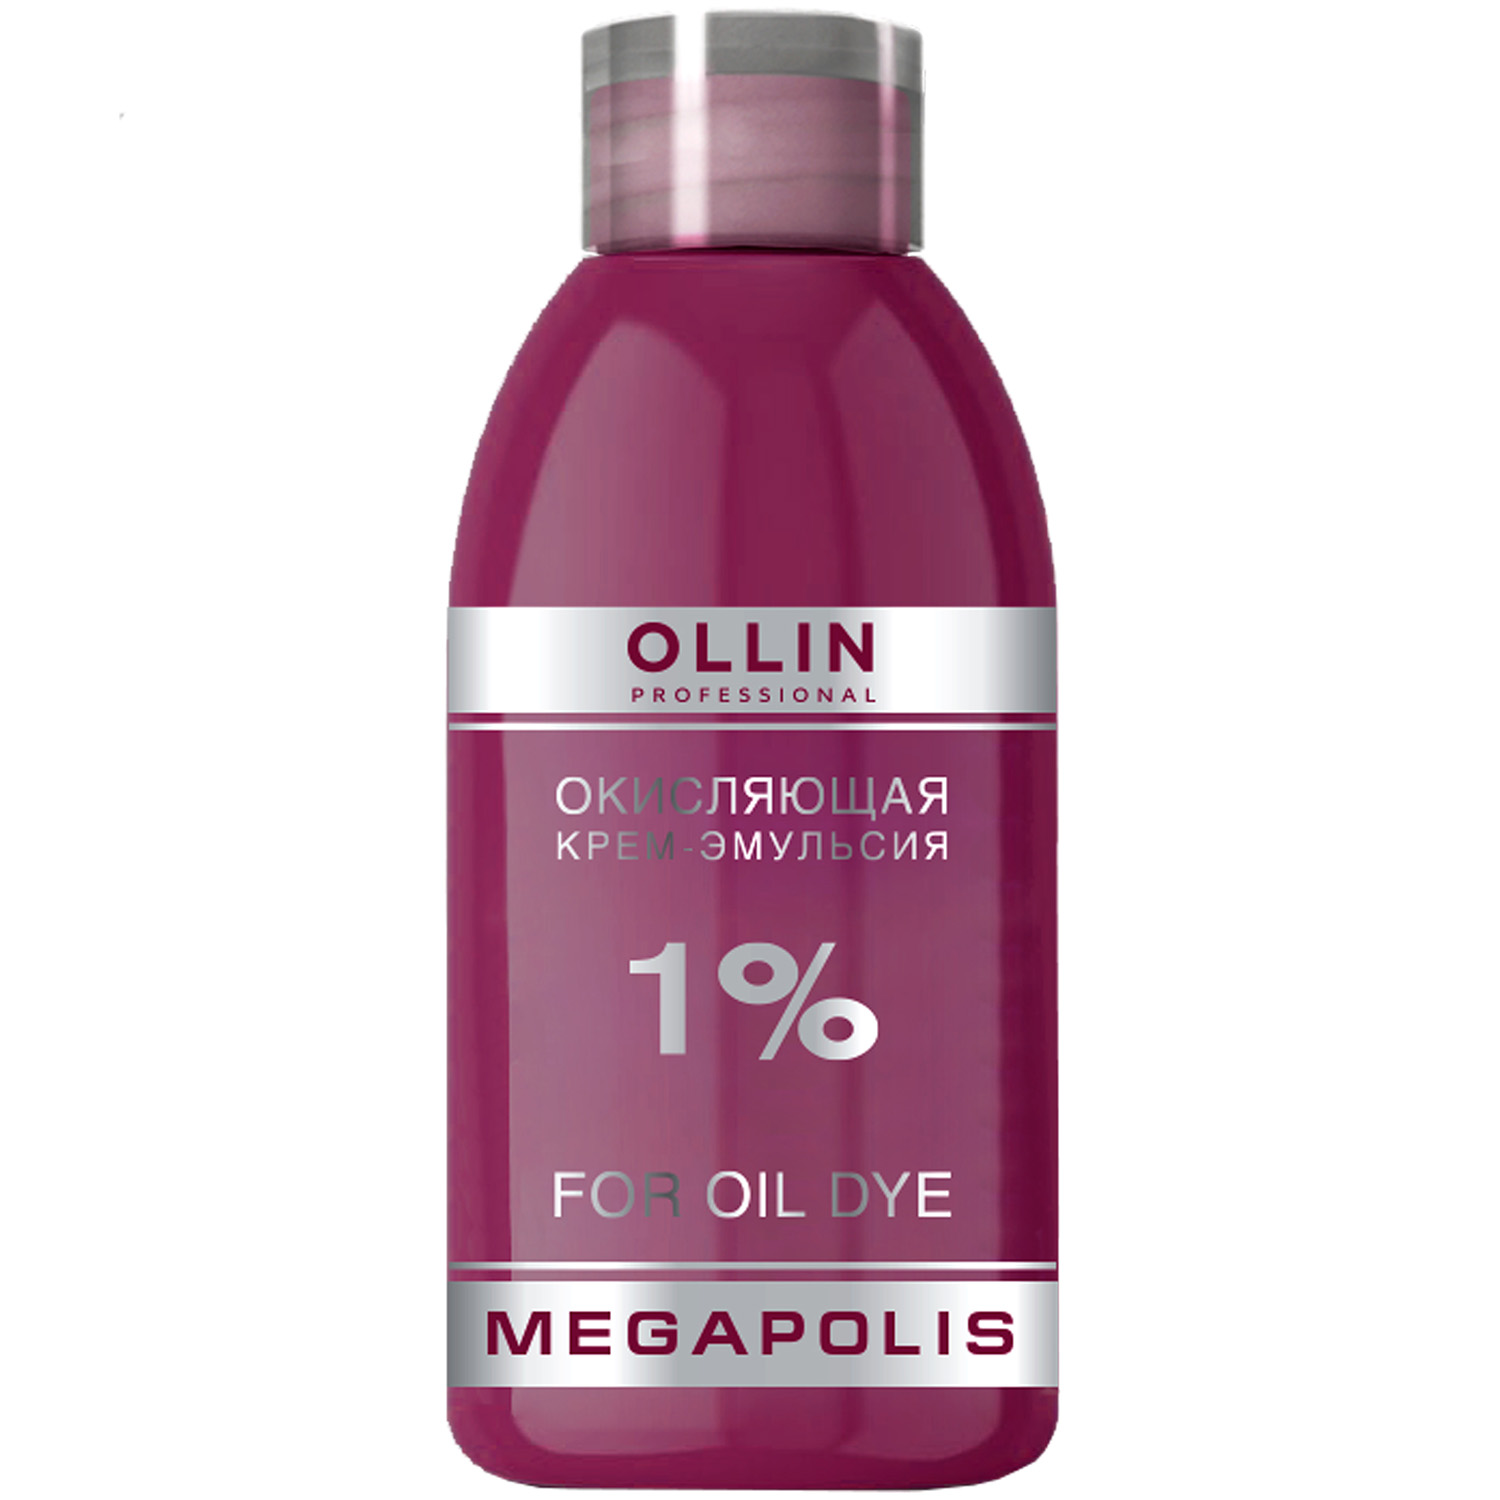 Ollin Professional Окисляющая крем-эмульсия 1%, 75 мл (Ollin Professional, Megapolis) окисляющая крем эмульсия megapolis 2 7% 500 мл